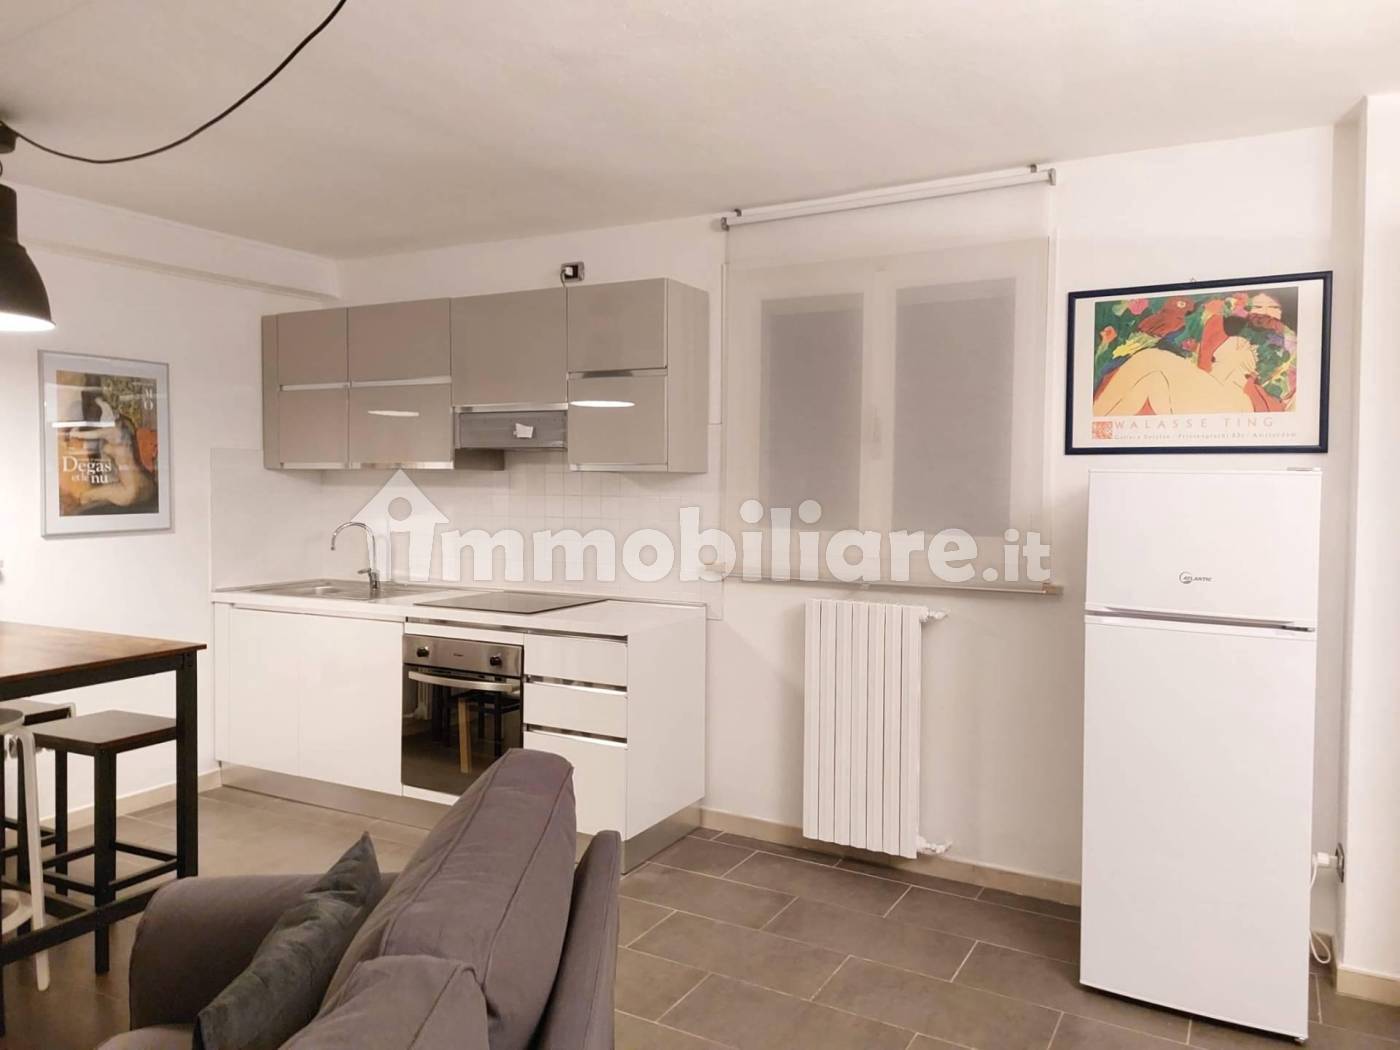 Rent Apartment Parma. 2-room flat in via Montebello. Good condition, ground  floor, central heating, ref. 93441022